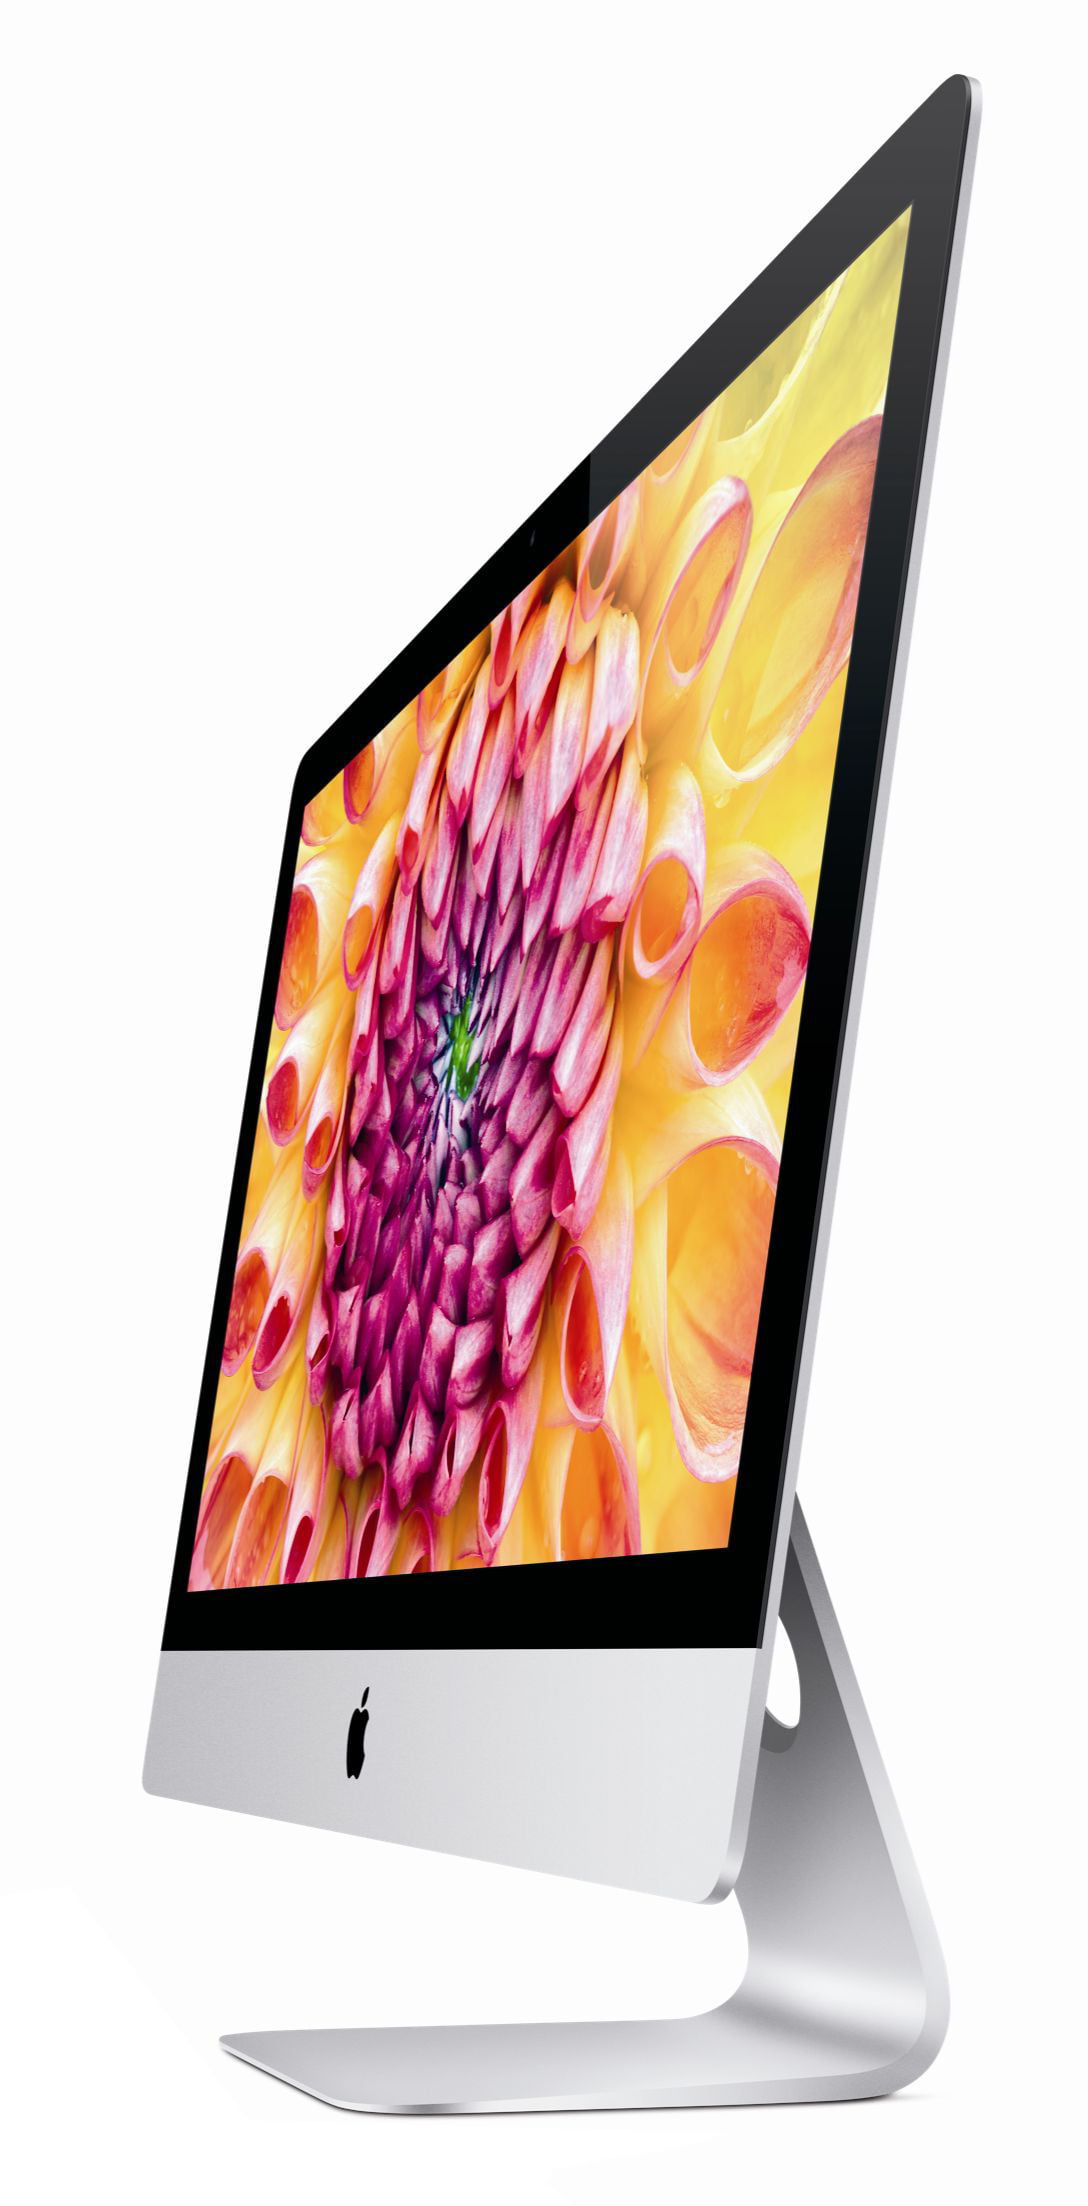 Restored Apple iMac 21.5-inch 2.7GHZ Quad Core i5 (Late 2012 